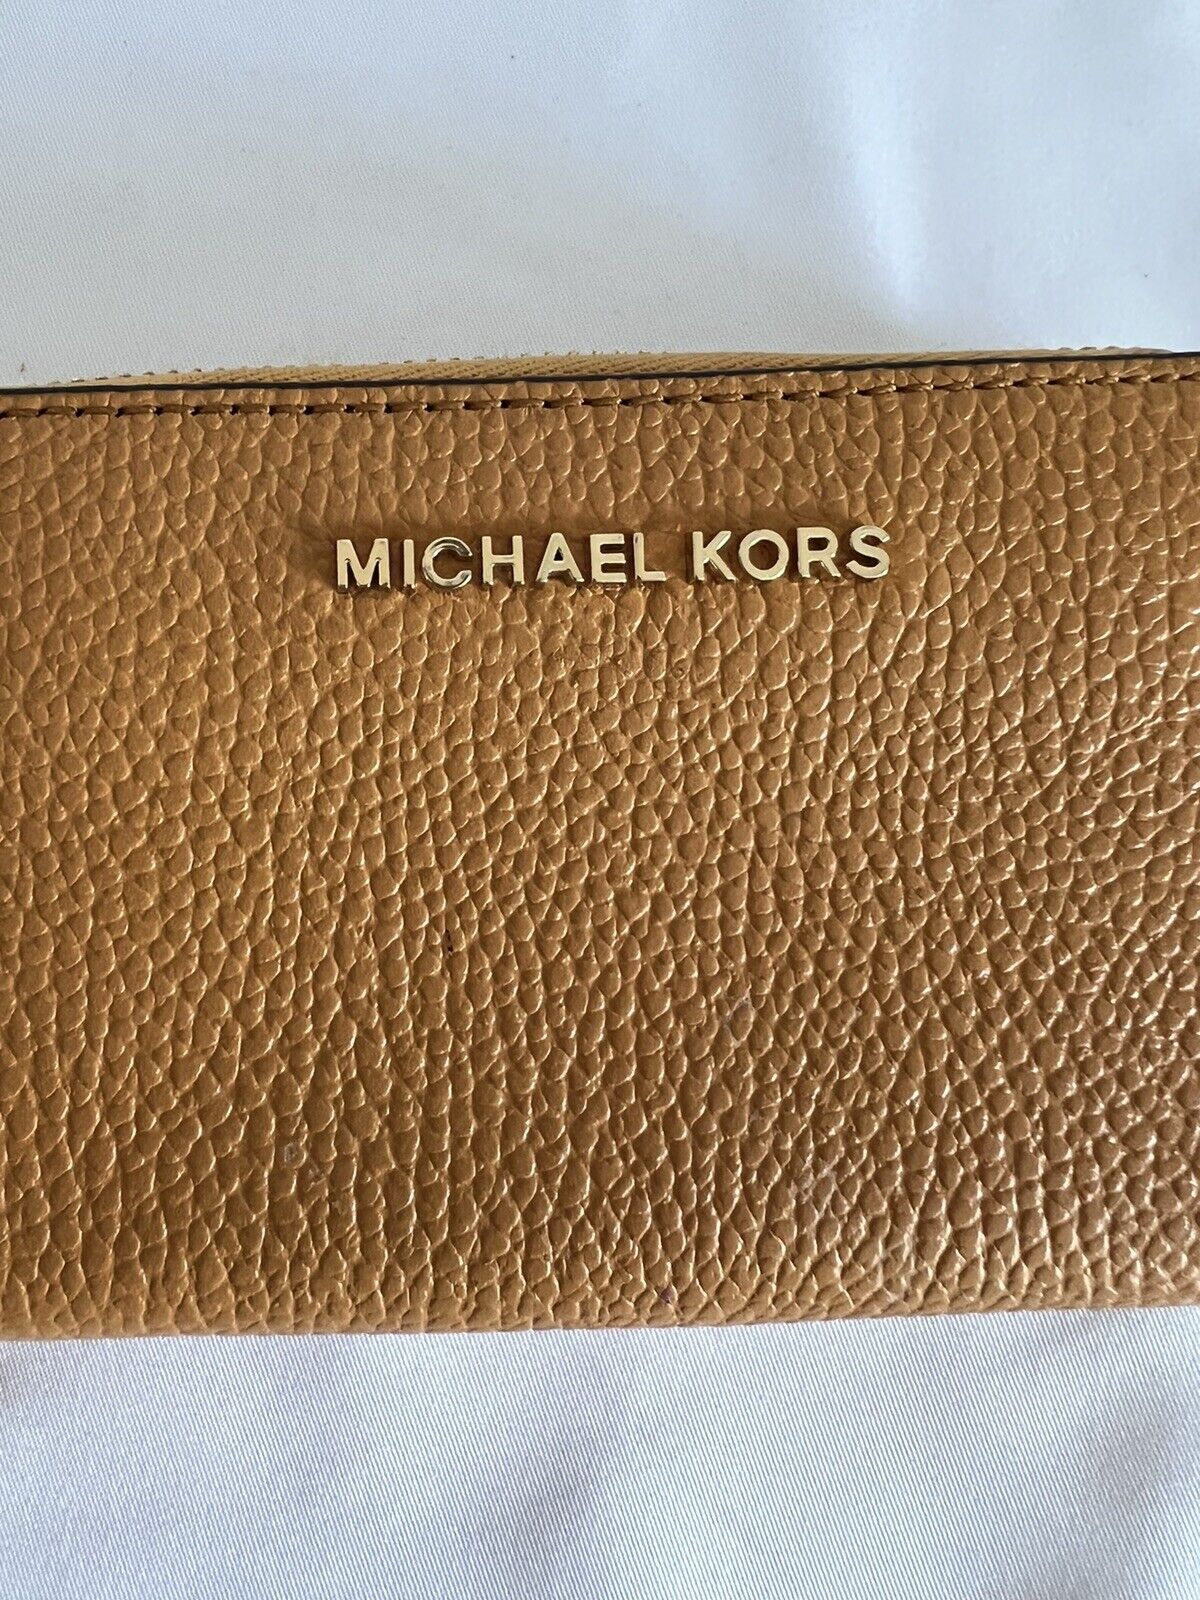 Michael Kors yellow wallet